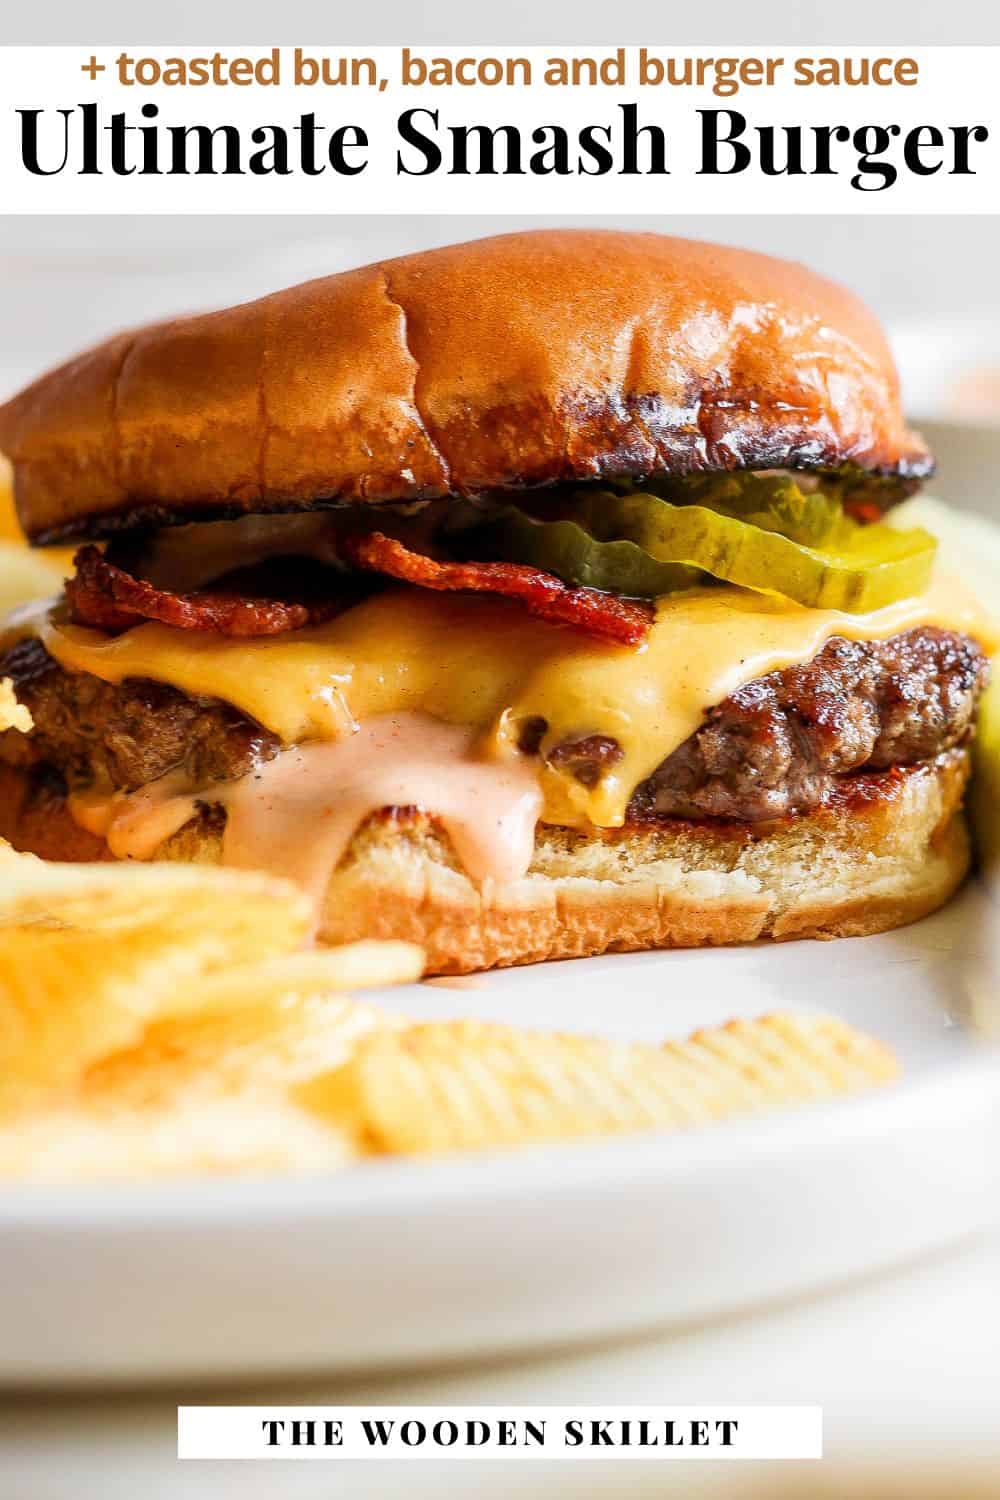 Pinterest image for a smash burger.